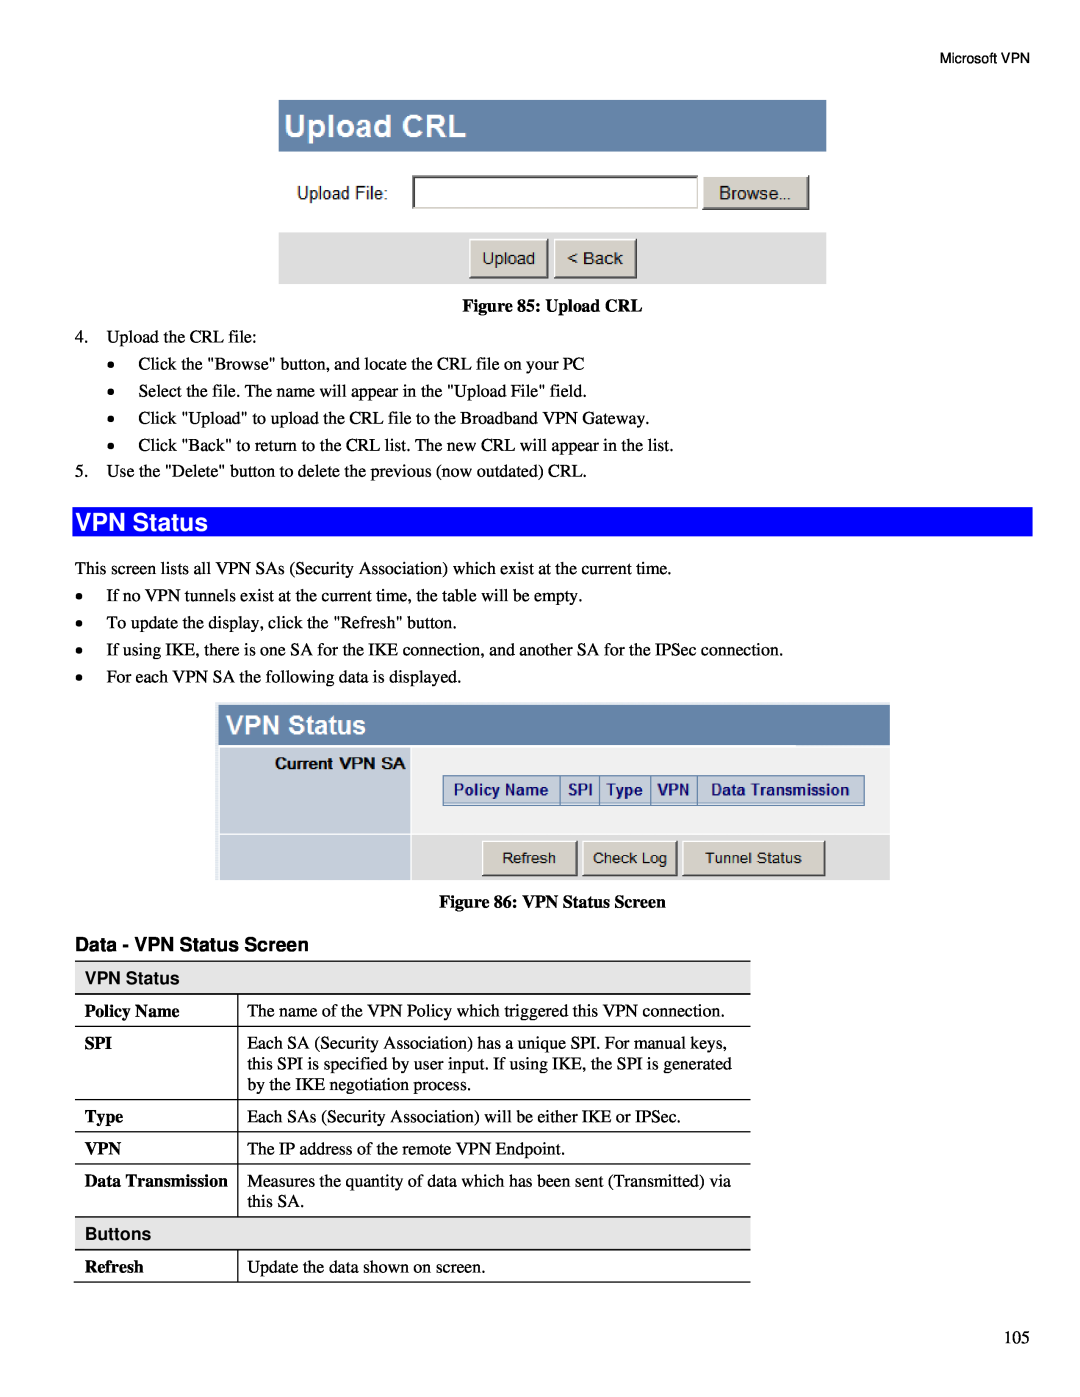 TRENDnet TW100-BRV324 manual Data - VPN Status Screen, Buttons 